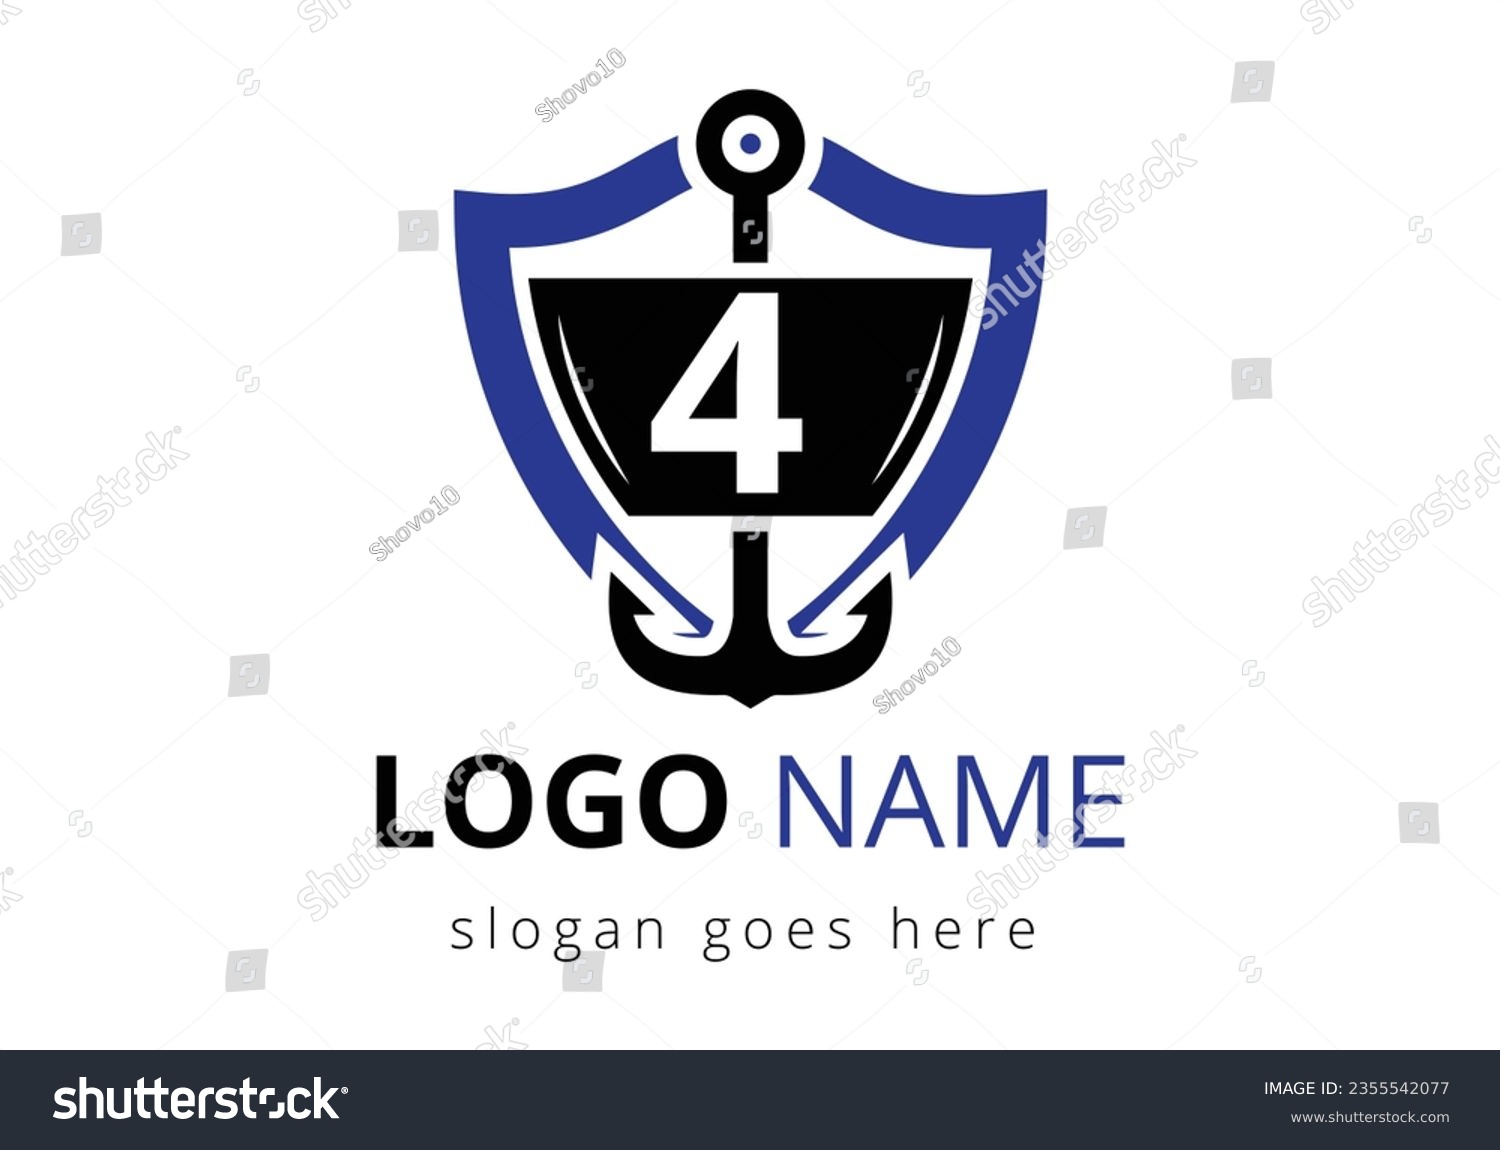 SVG of letter 4 with Anchor Logo Design Template. Marine, Sailing Boat Logo svg